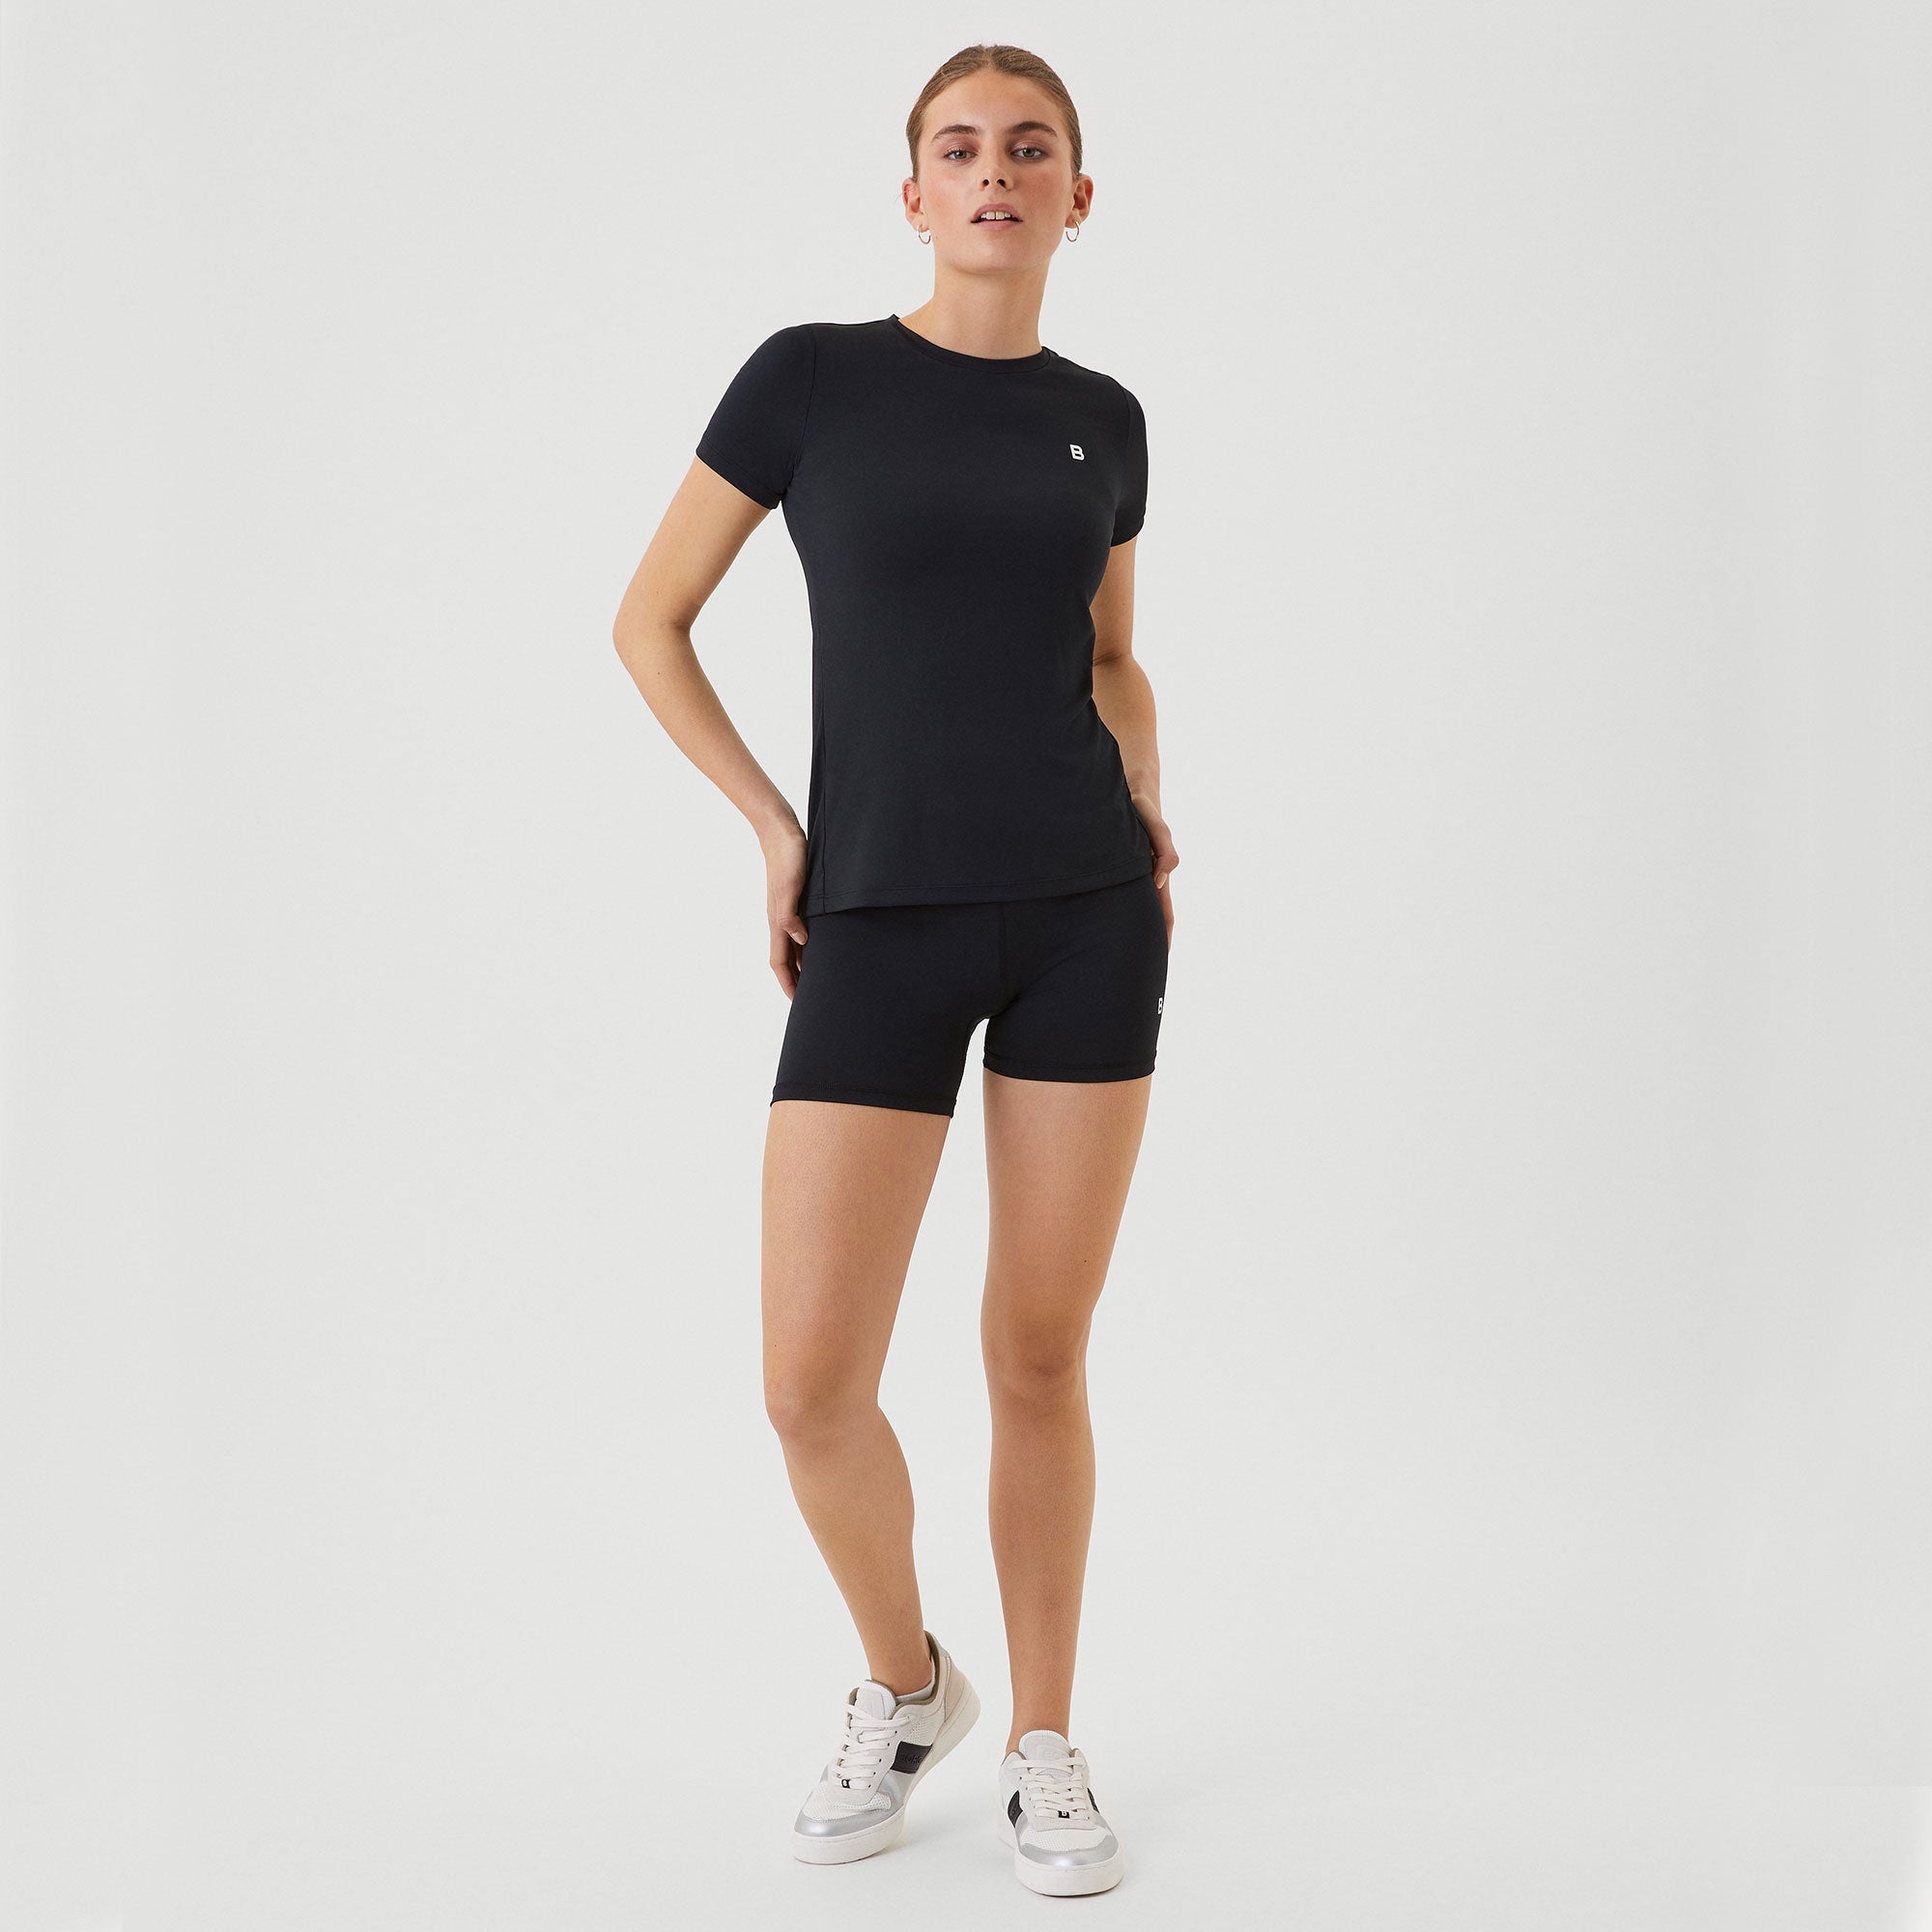 Björn Borg Ace Women's Slim Tennis Shirt - Black (3)